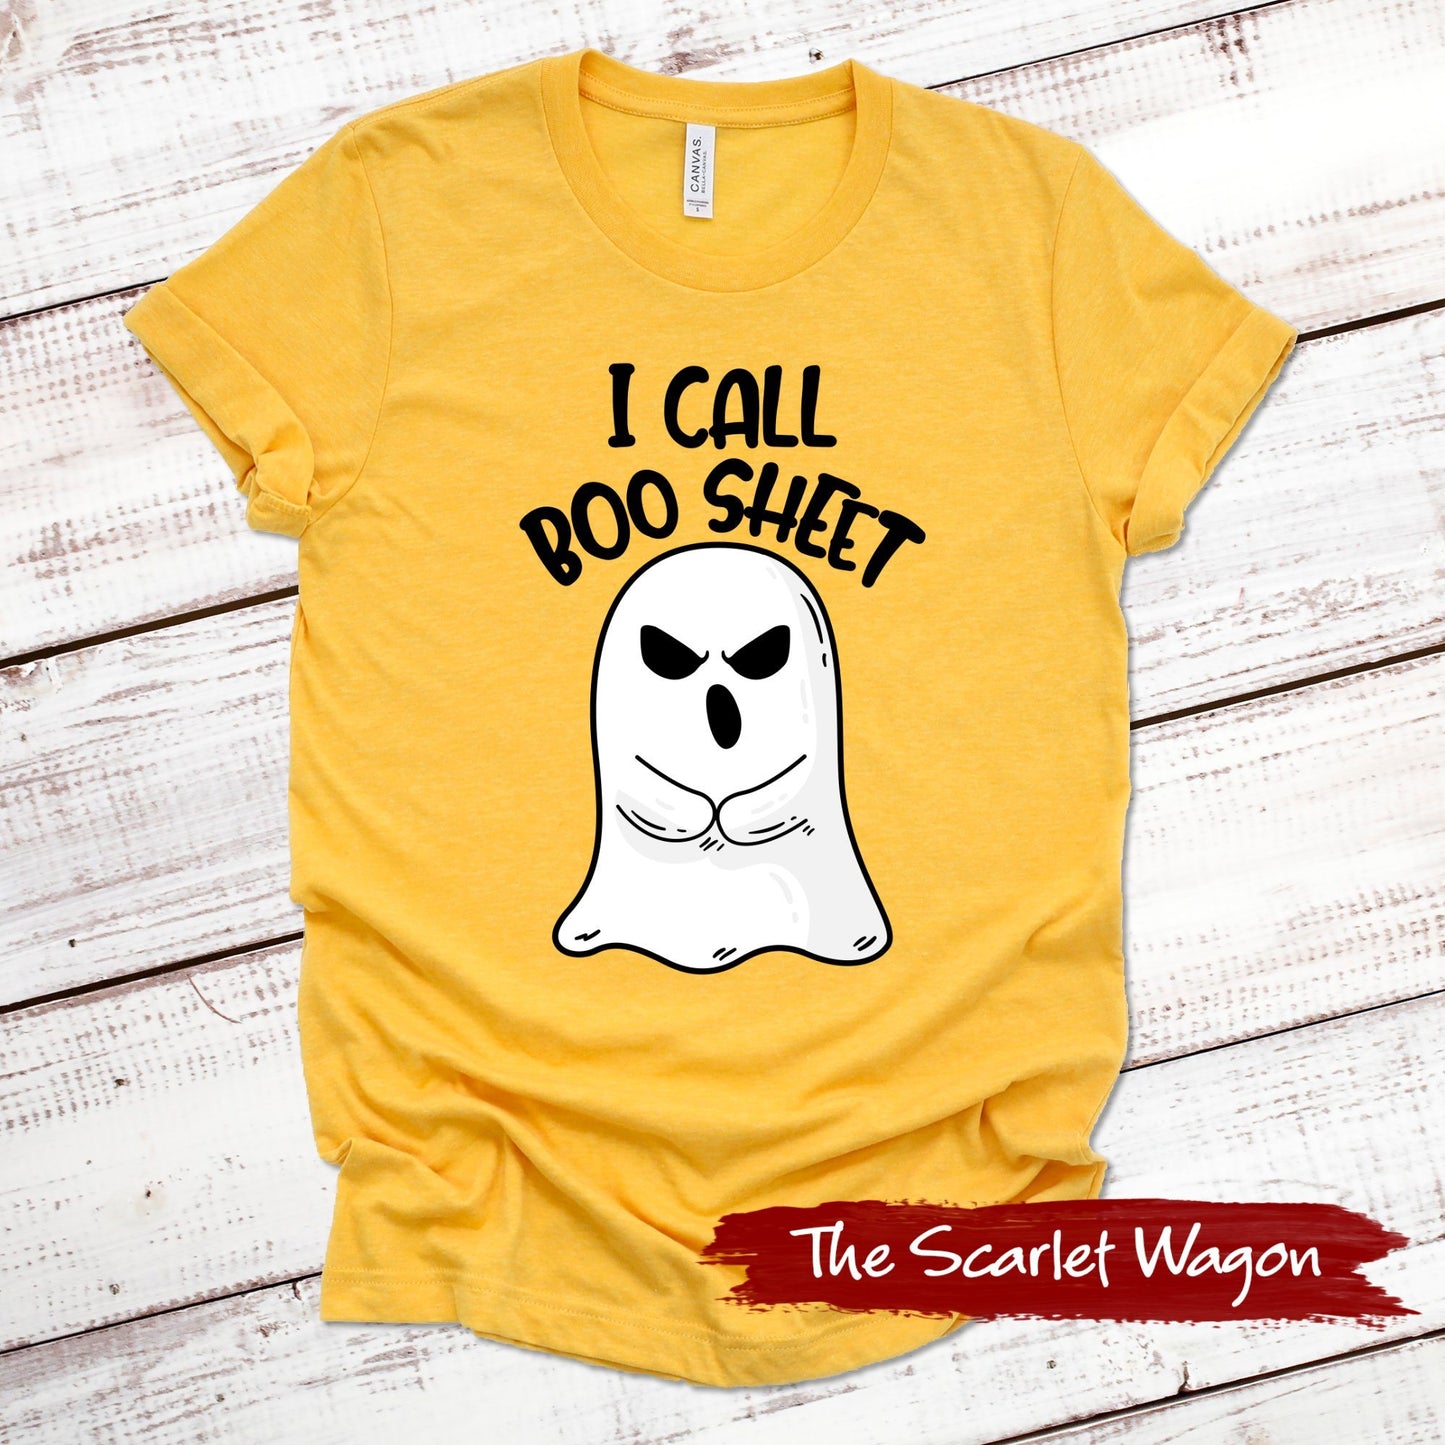 I Call Boo Sheet Halloween Shirt Scarlet Wagon Heather Gold XS 